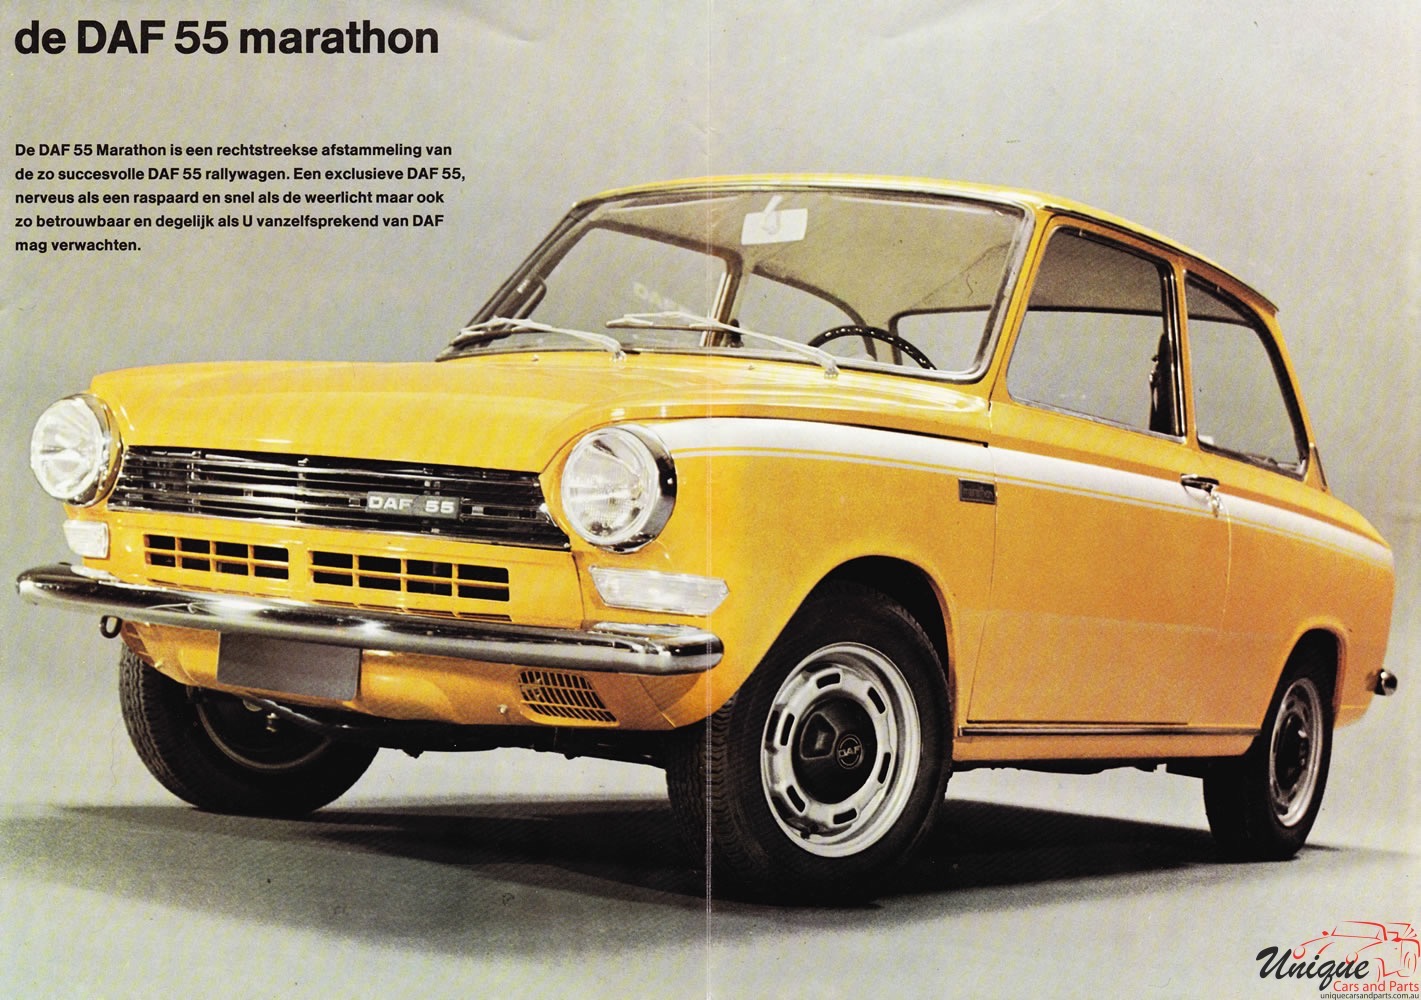 1971 DAF 55 Marathon Brochure Page 6